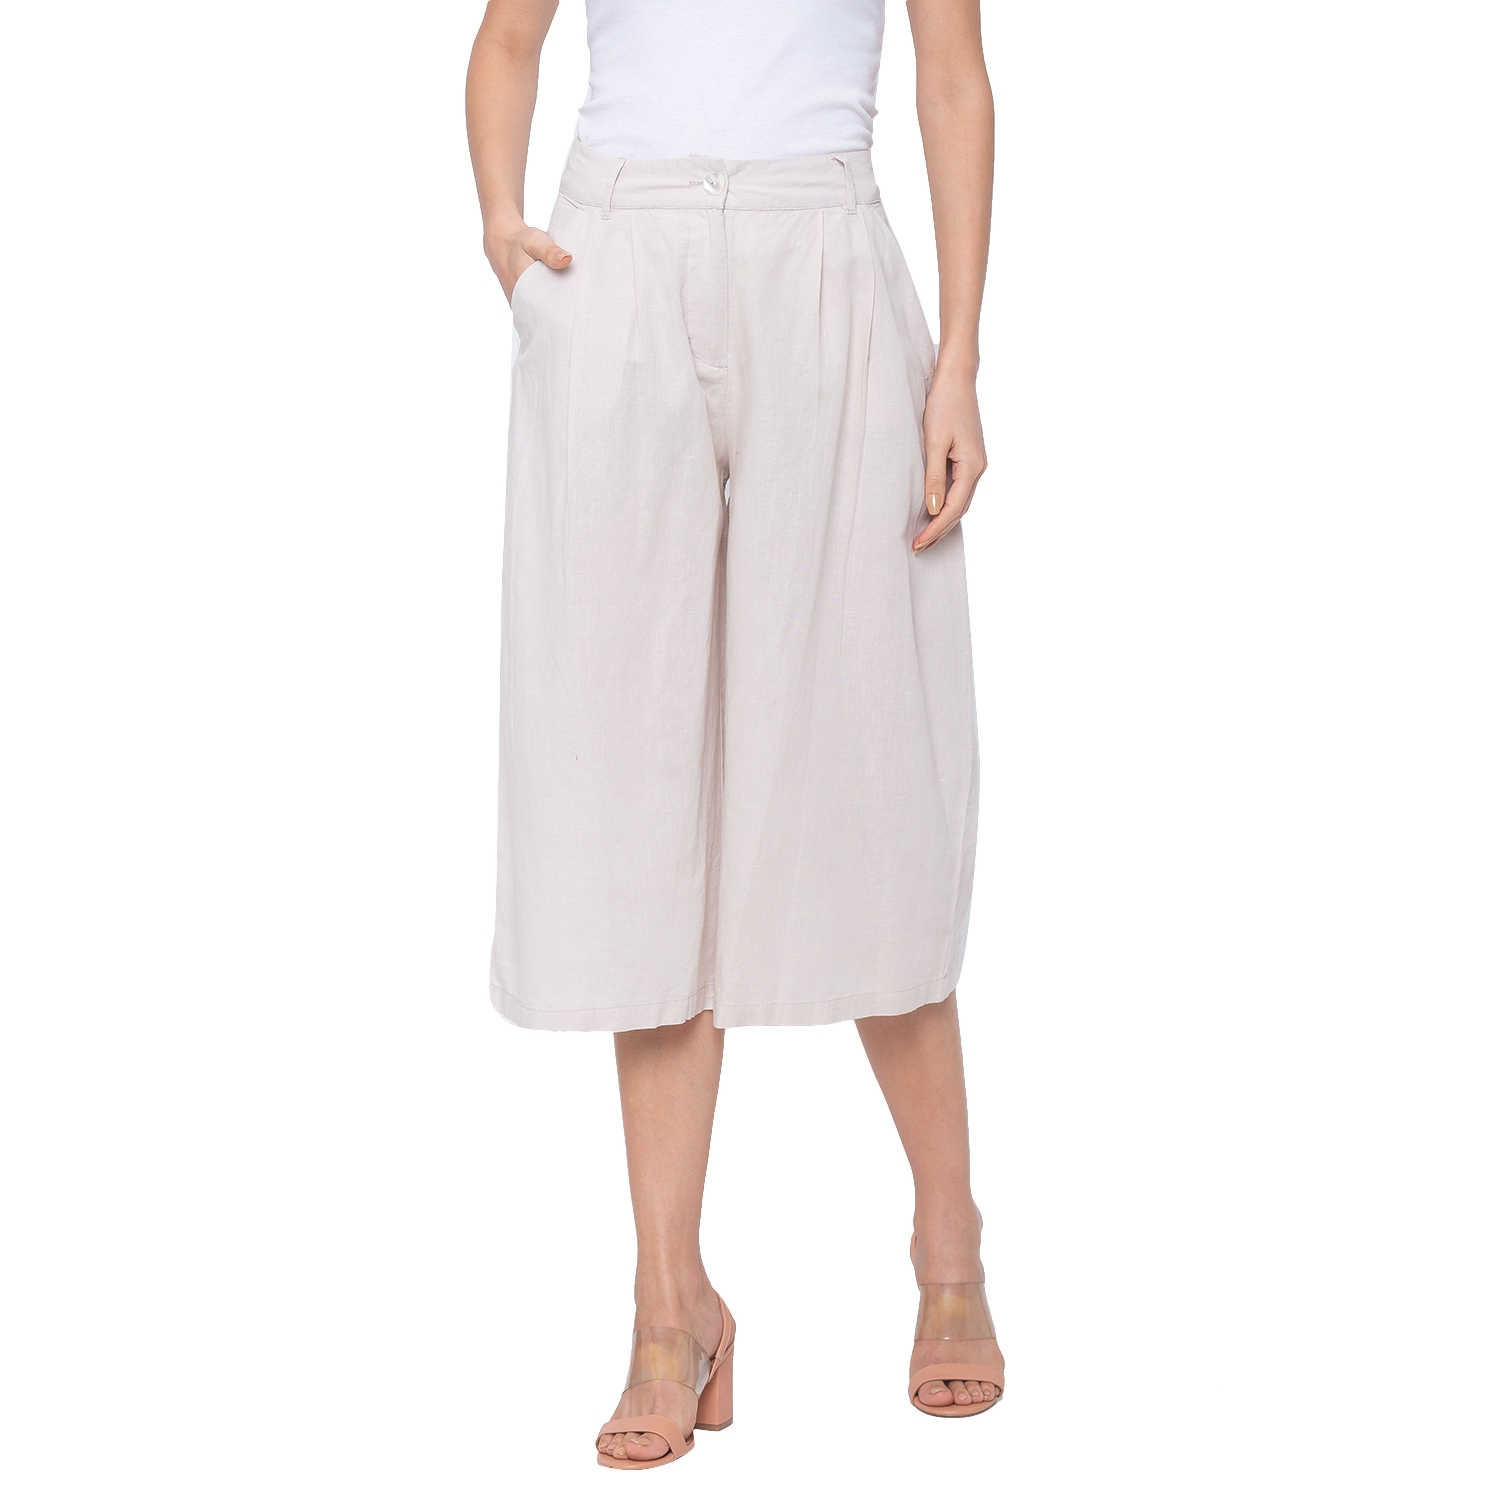 globus | Women's White Cotton Solid Culottes 0